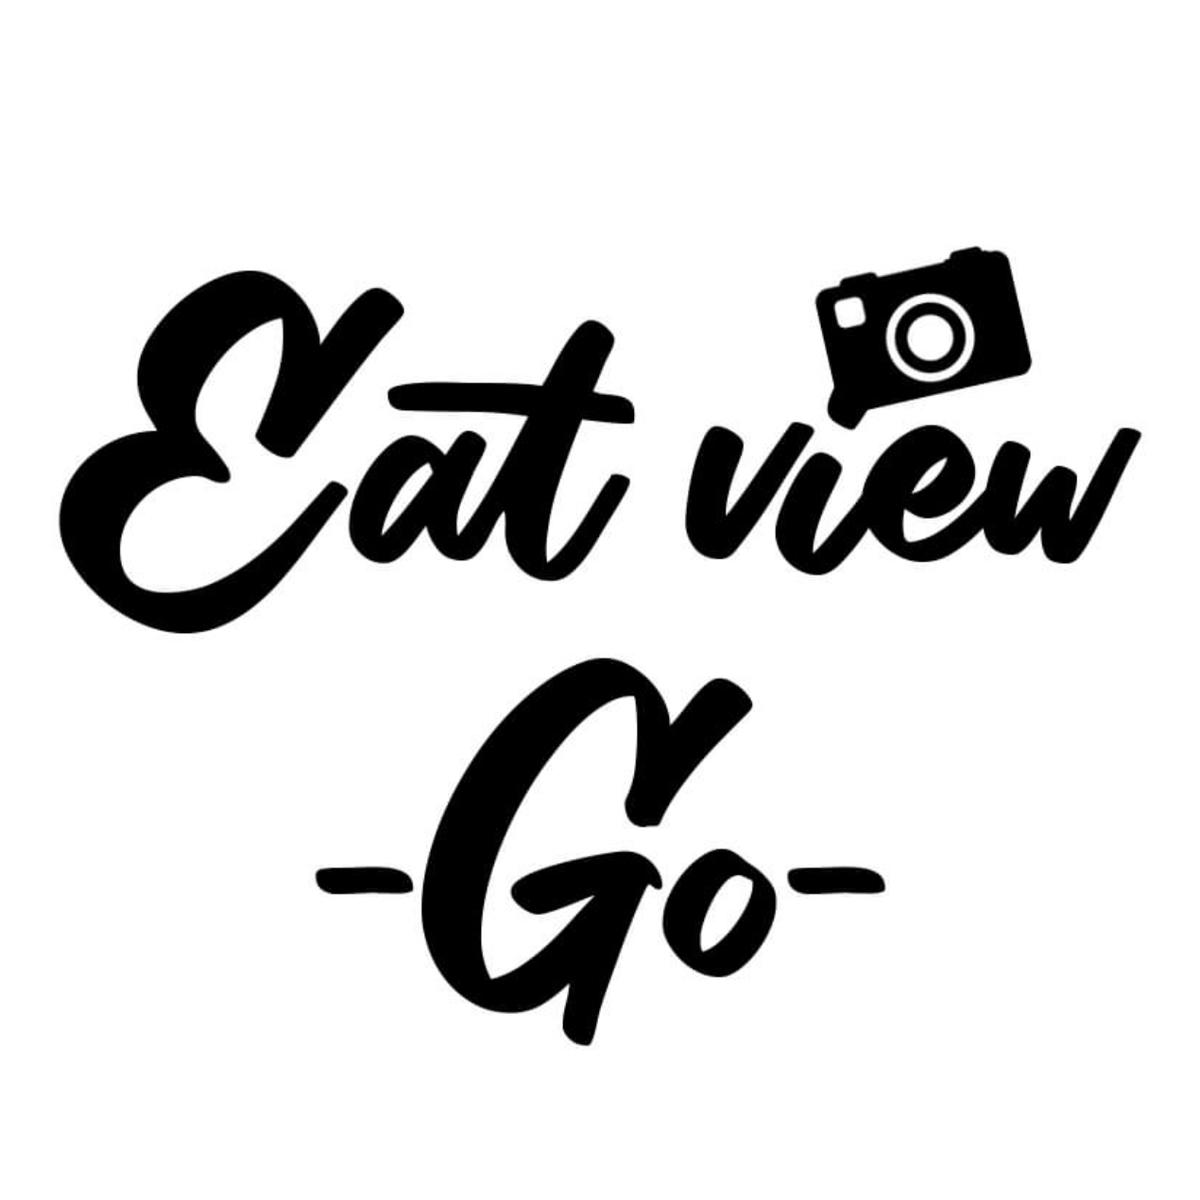 Eatviewgo's images